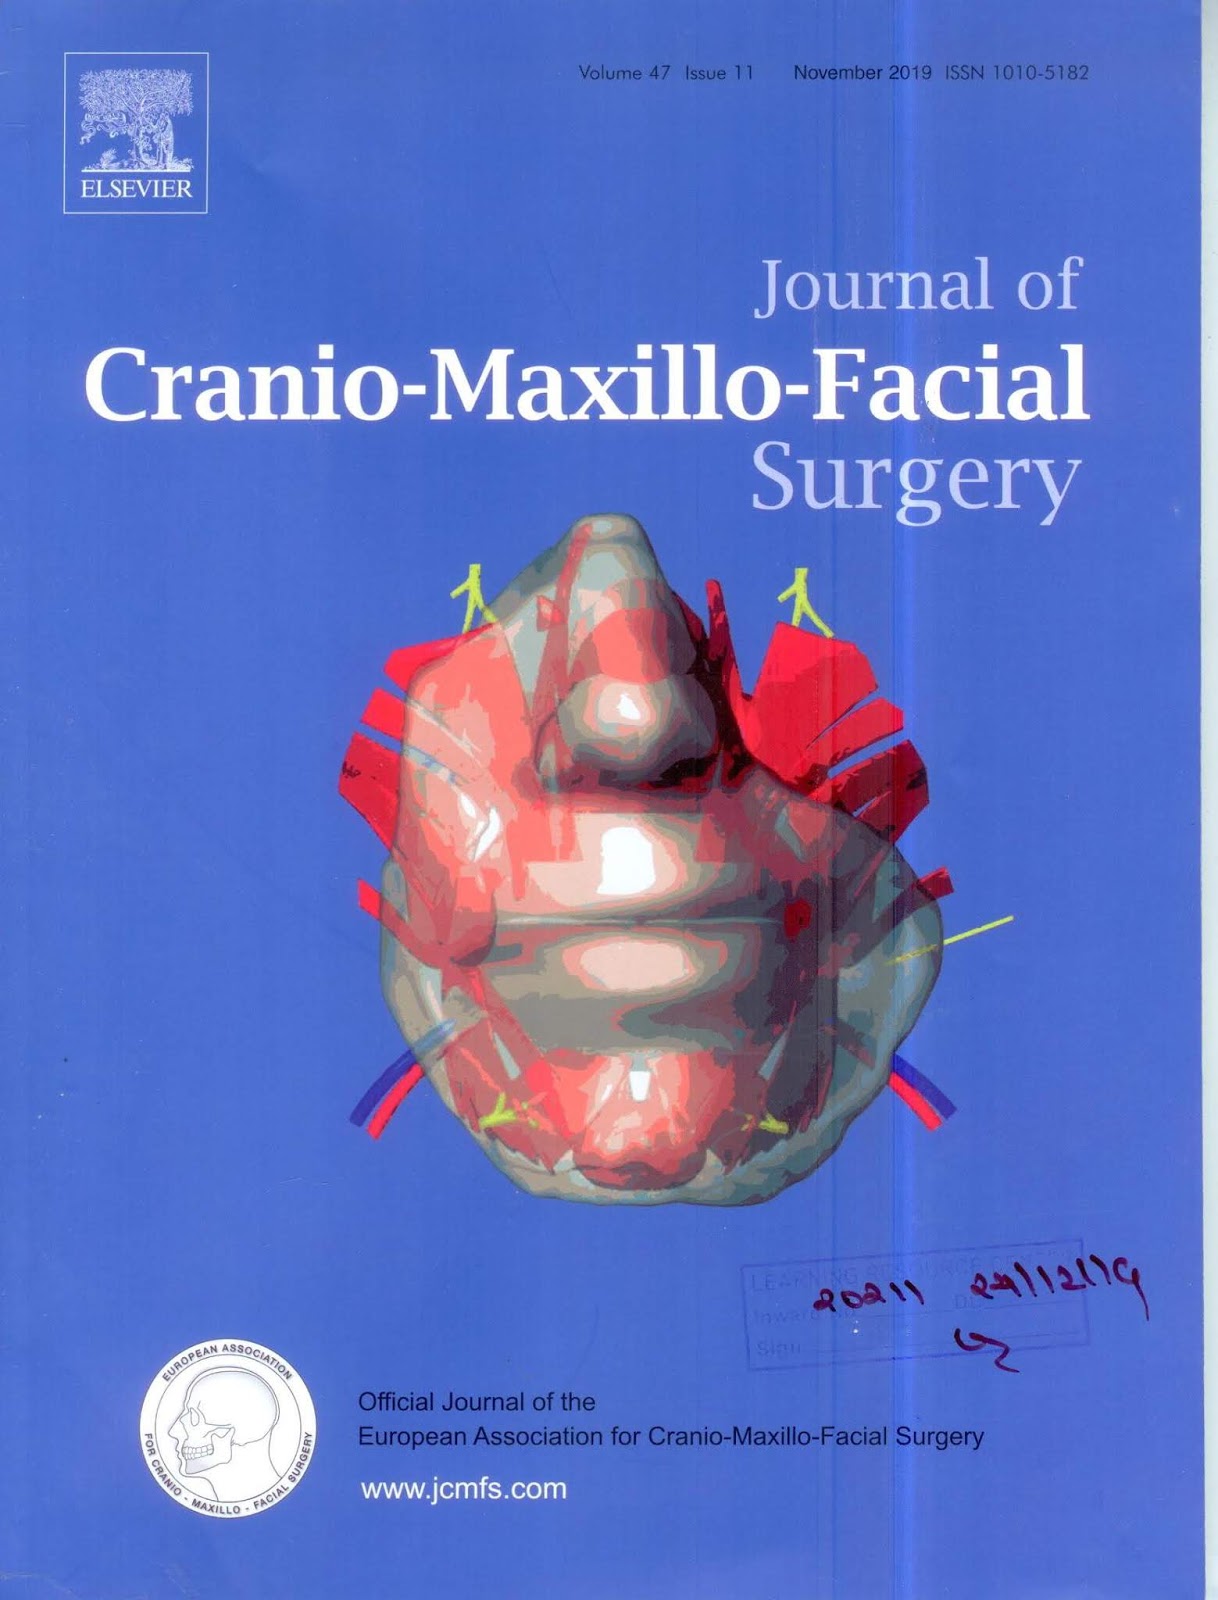 https://www.sciencedirect.com/journal/journal-of-cranio-maxillofacial-surgery/vol/47/issue/11